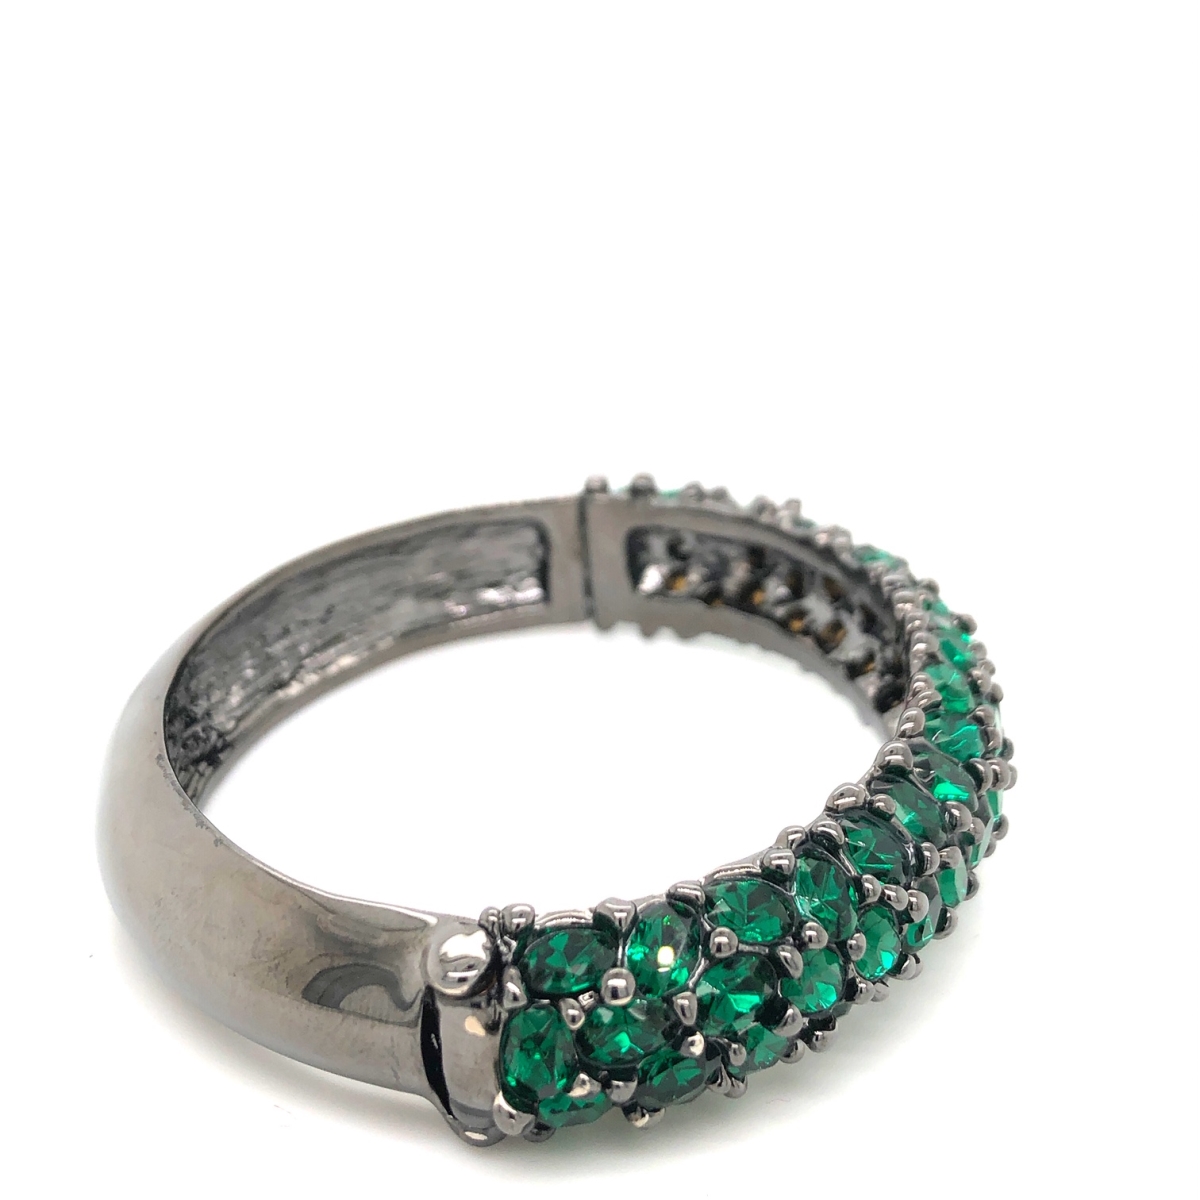 Q3603ok-green Fashionable Oval Crystal Studded Bangle Bracelet - Green